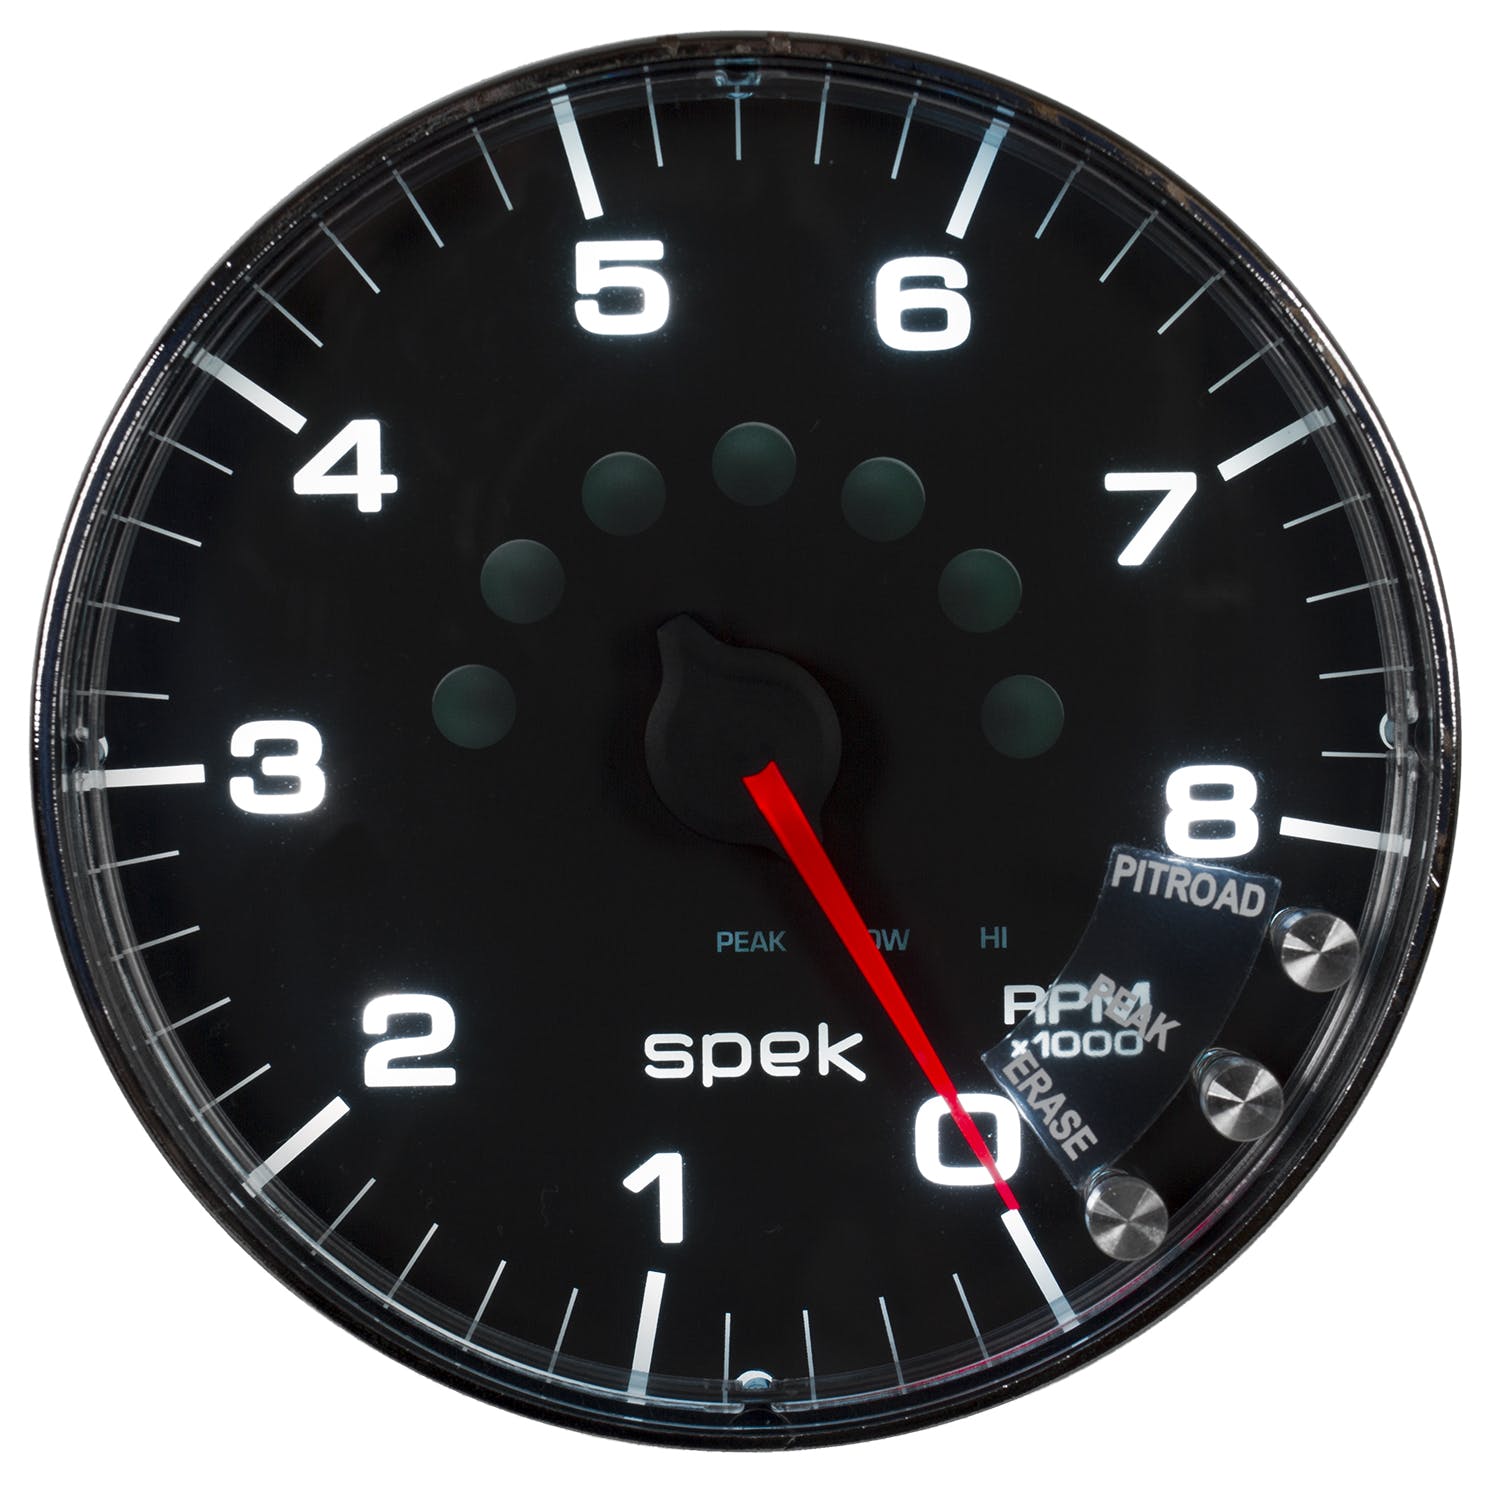 AutoMeter Products P238318 Spek Pro Tachometer Gauge 5, 8K RPM, with Shift Light, Black/Chrome